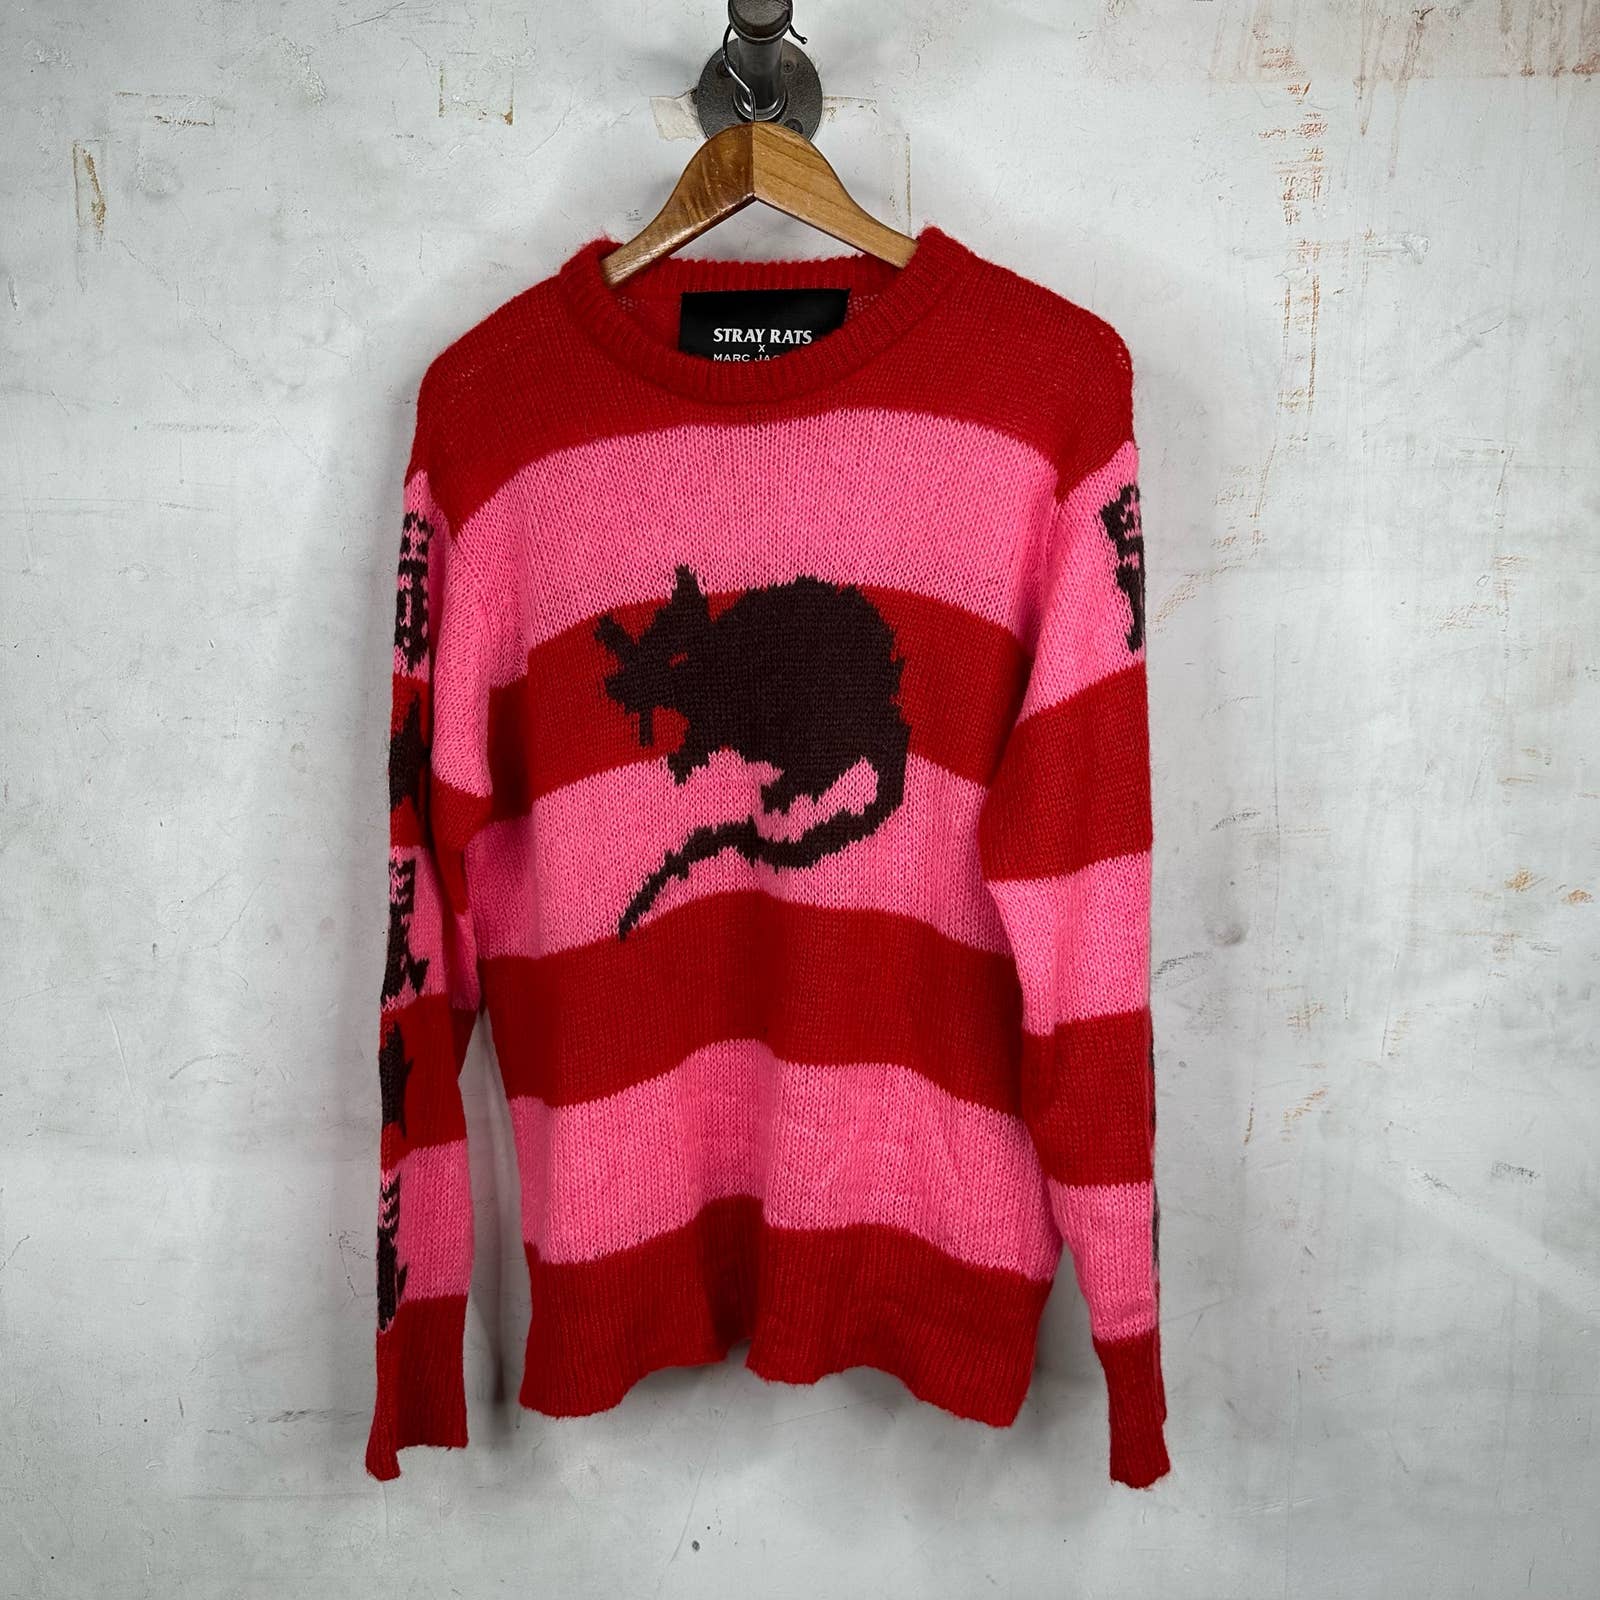 Heaven Stray Rats Grunge Sweater